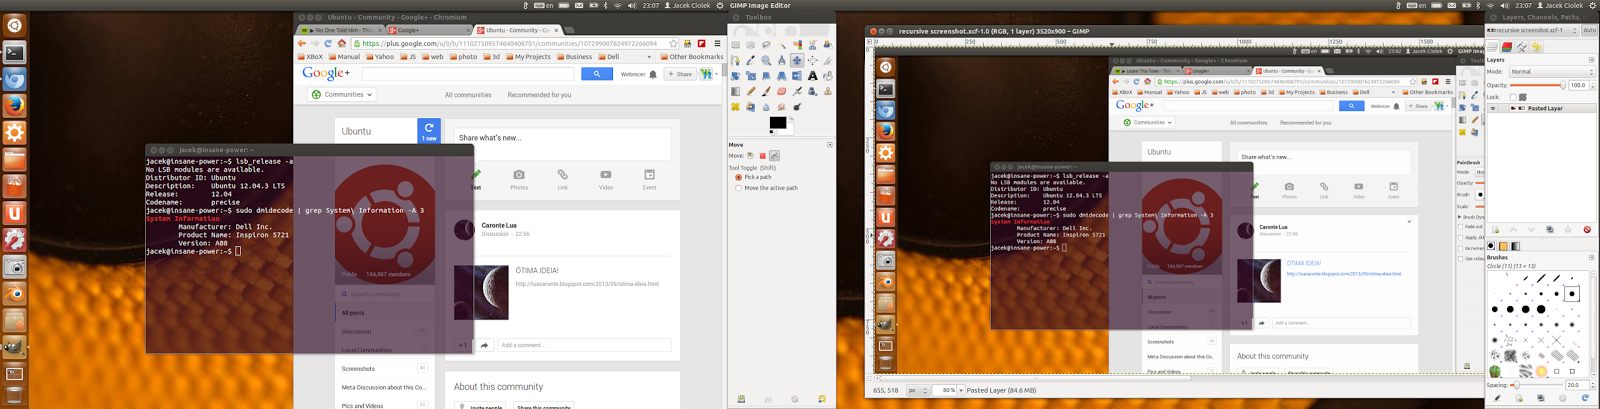 ubuntu 12.04.3 on Inspiron 17R